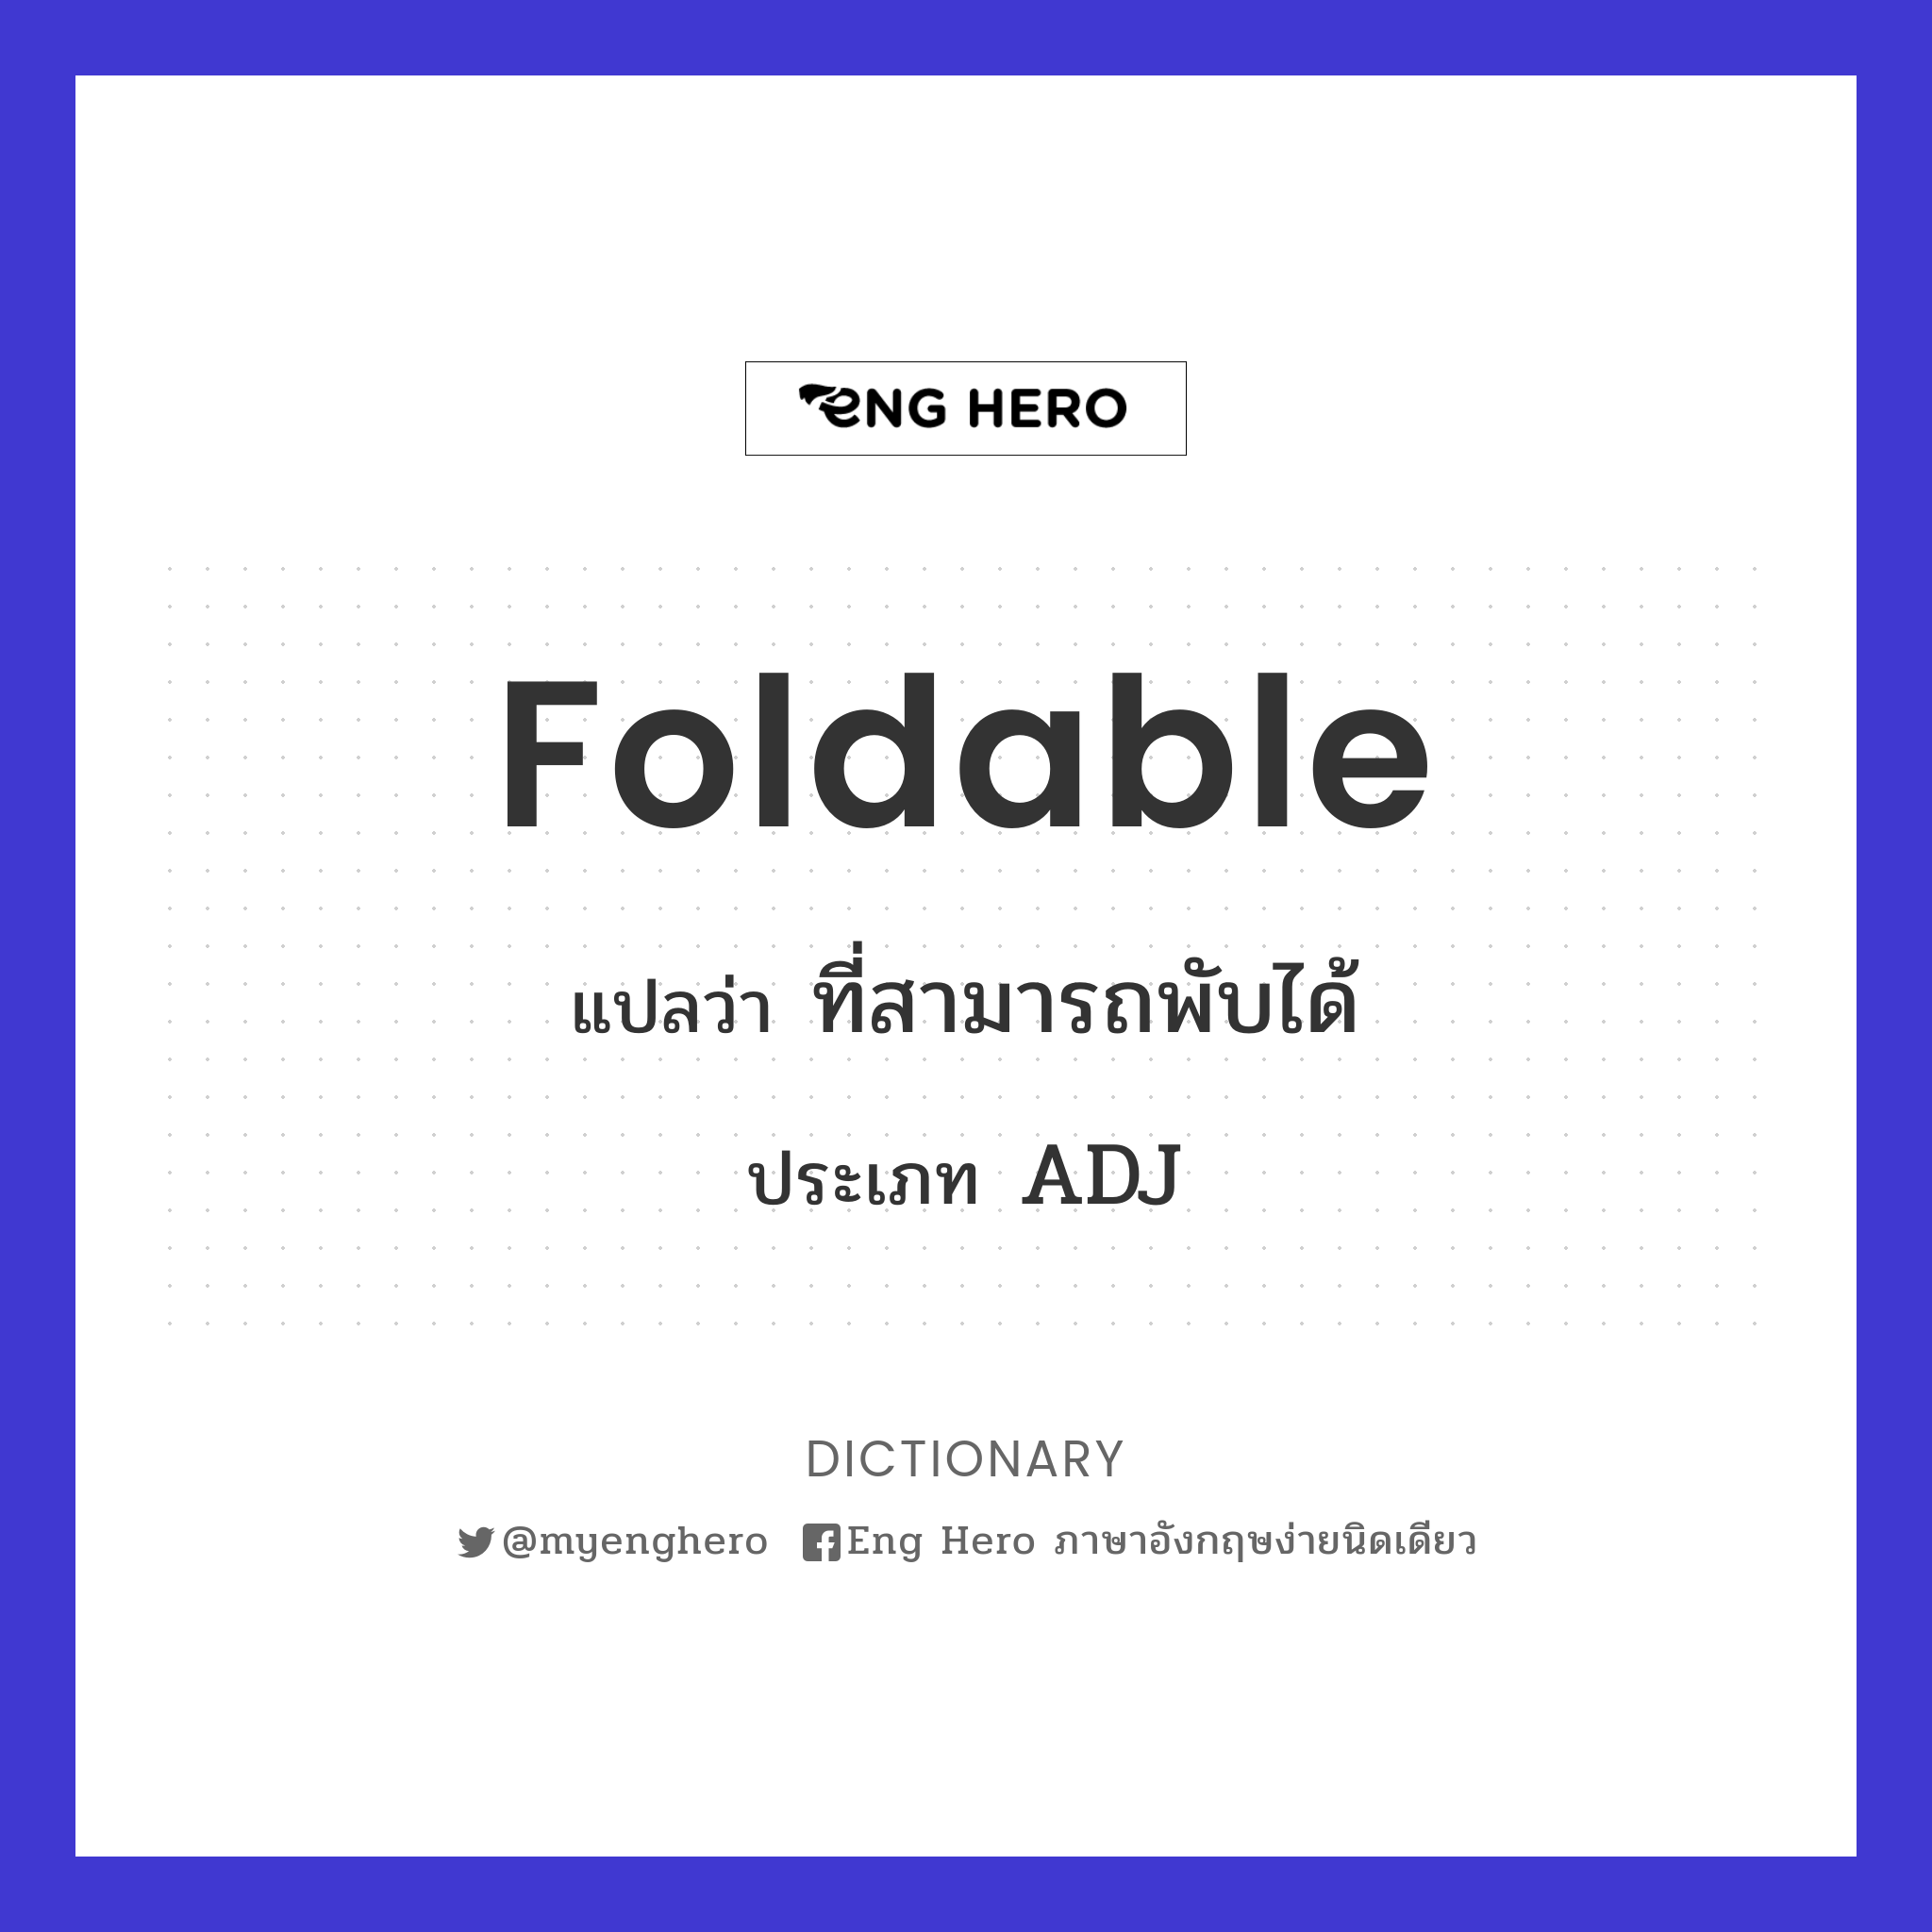 foldable